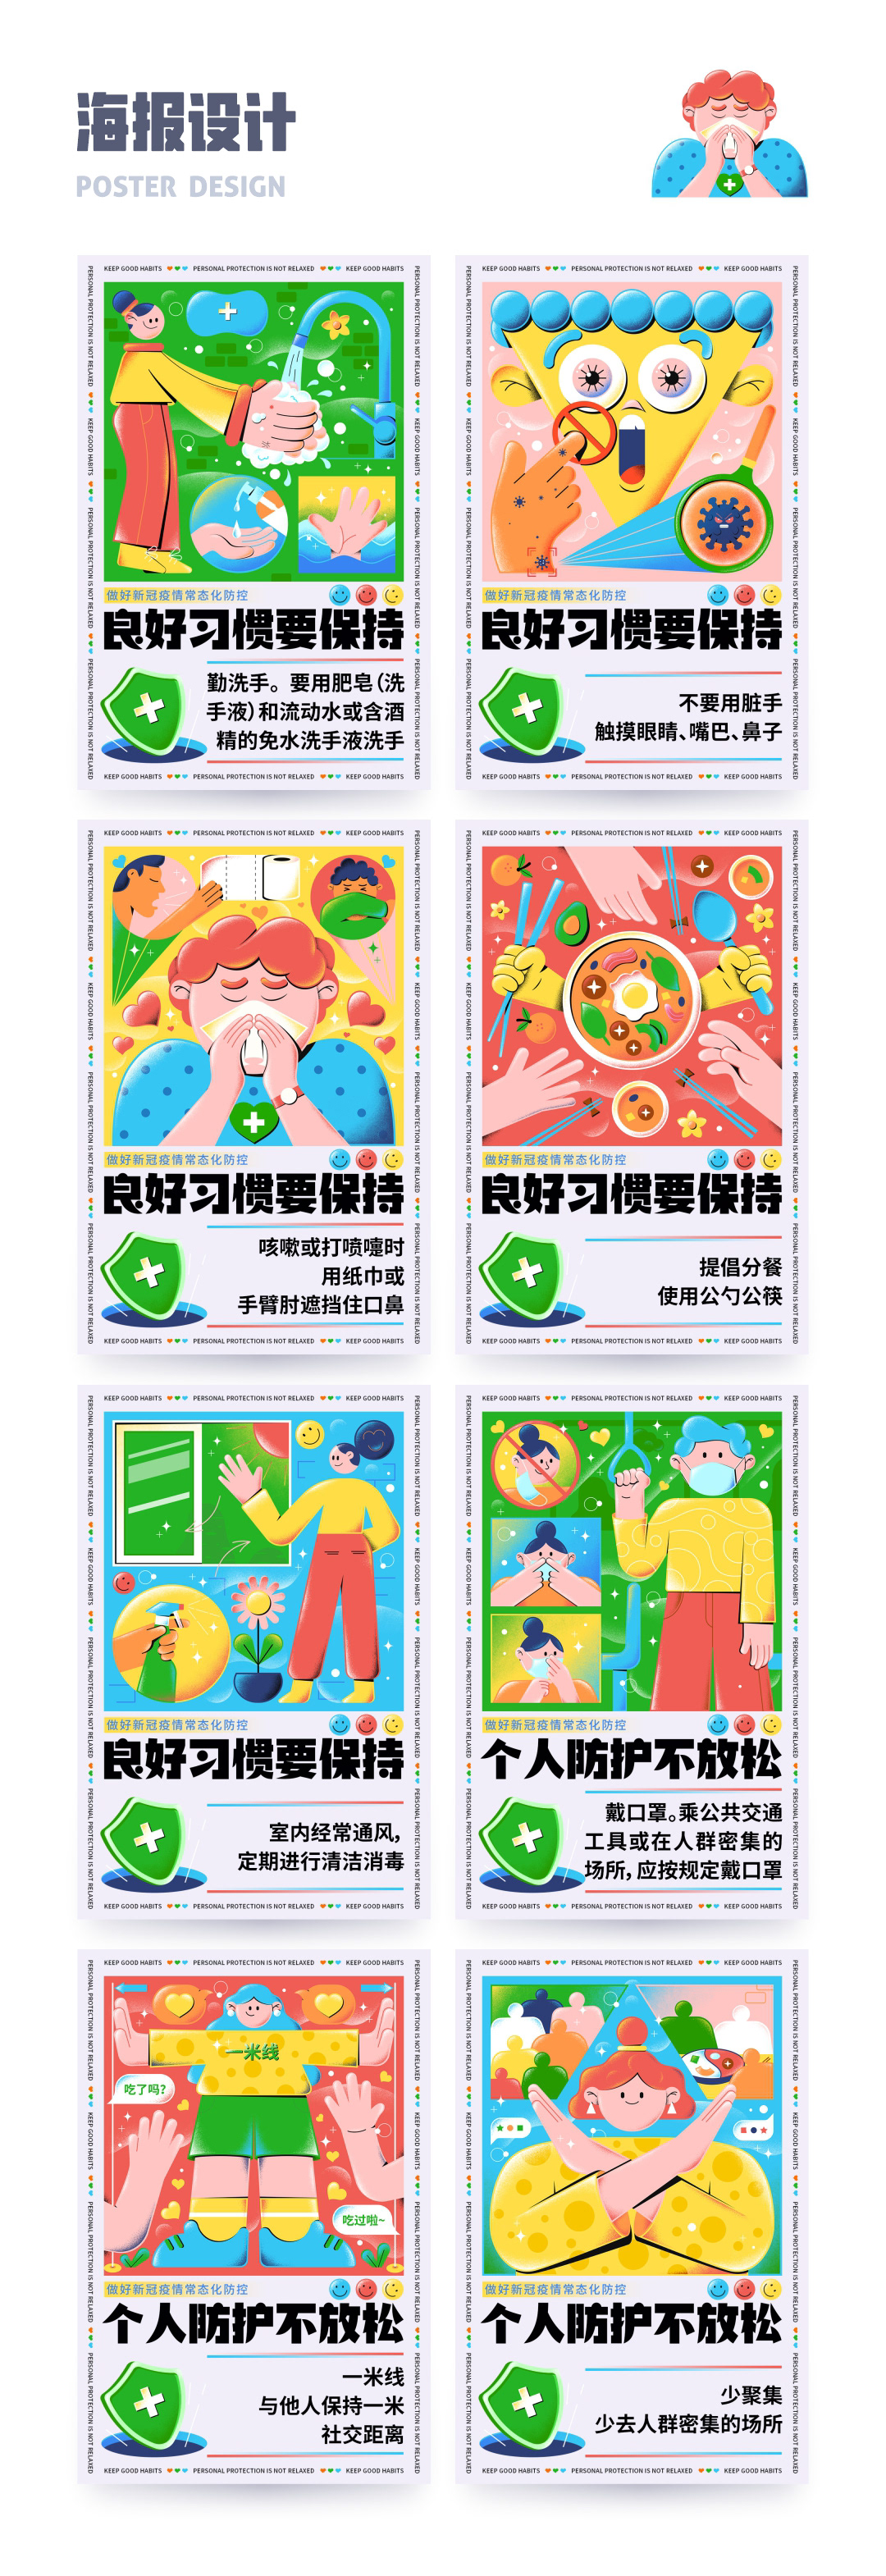 Anti-epidemic brochure china COVID-19 graphics illustrations Propaganda